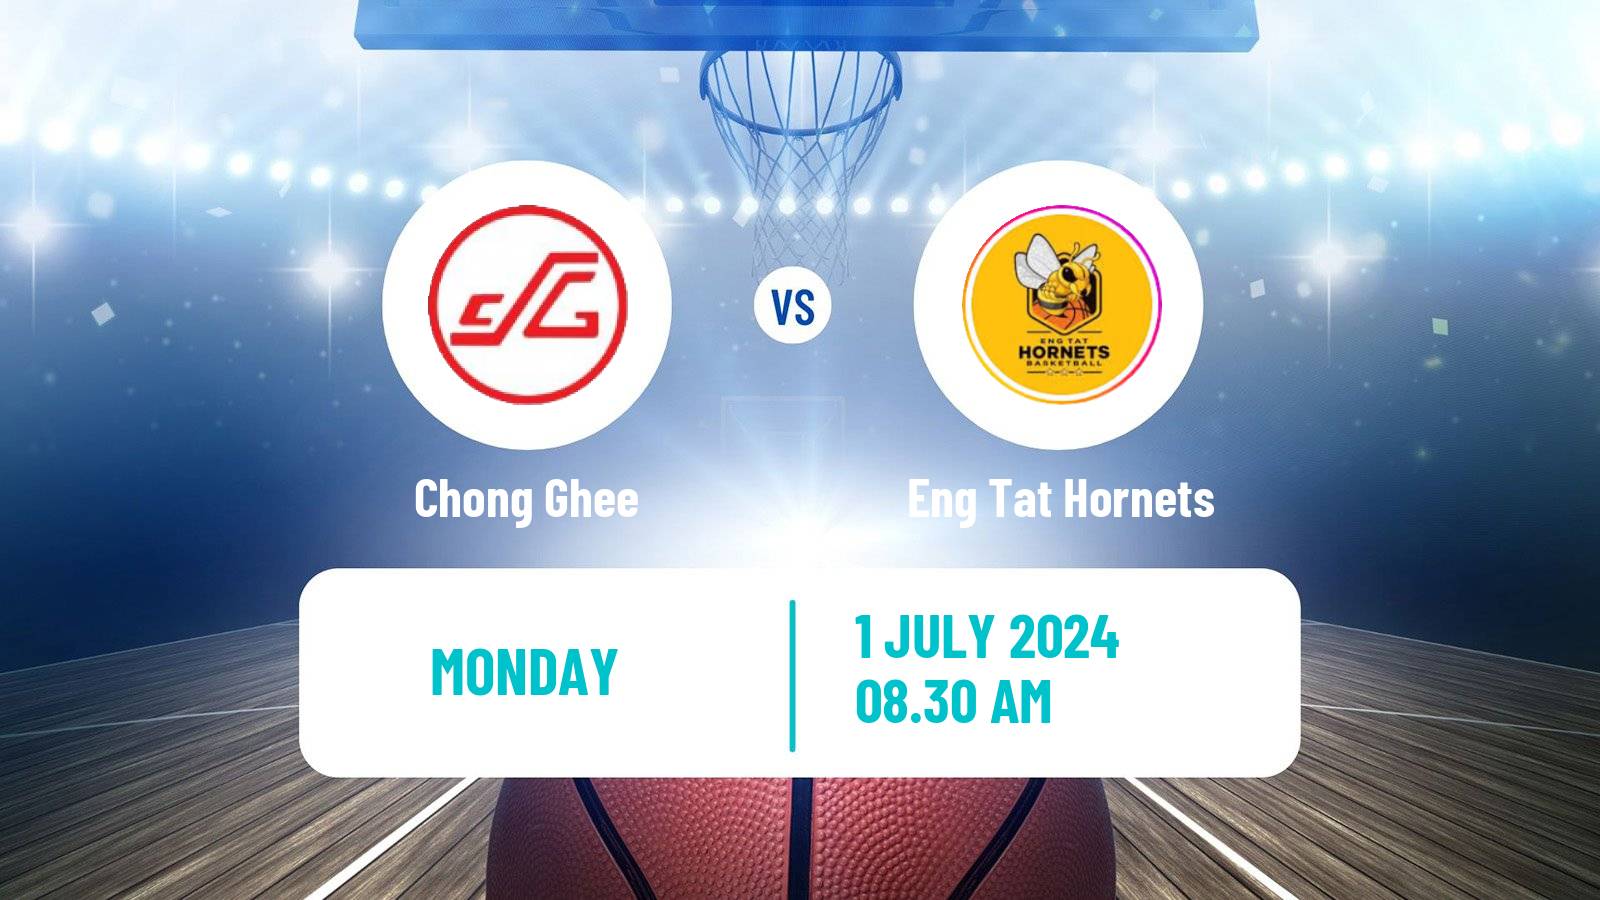 Basketball Singapore NBL Chong Ghee - Eng Tat Hornets